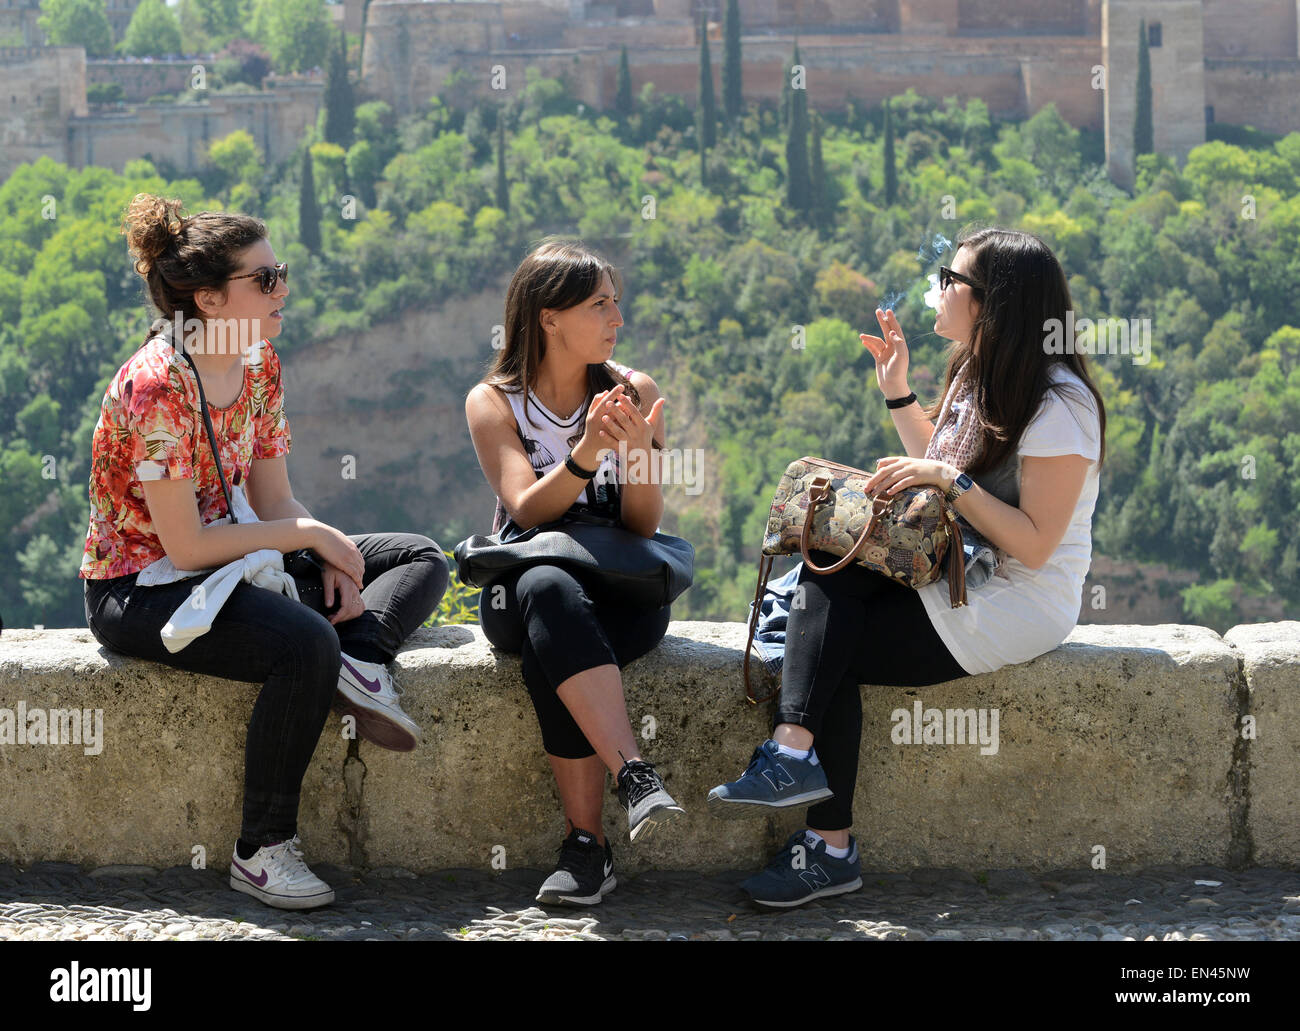 Girls women females sitting talking and smoking in Granada Spain Stock Photo